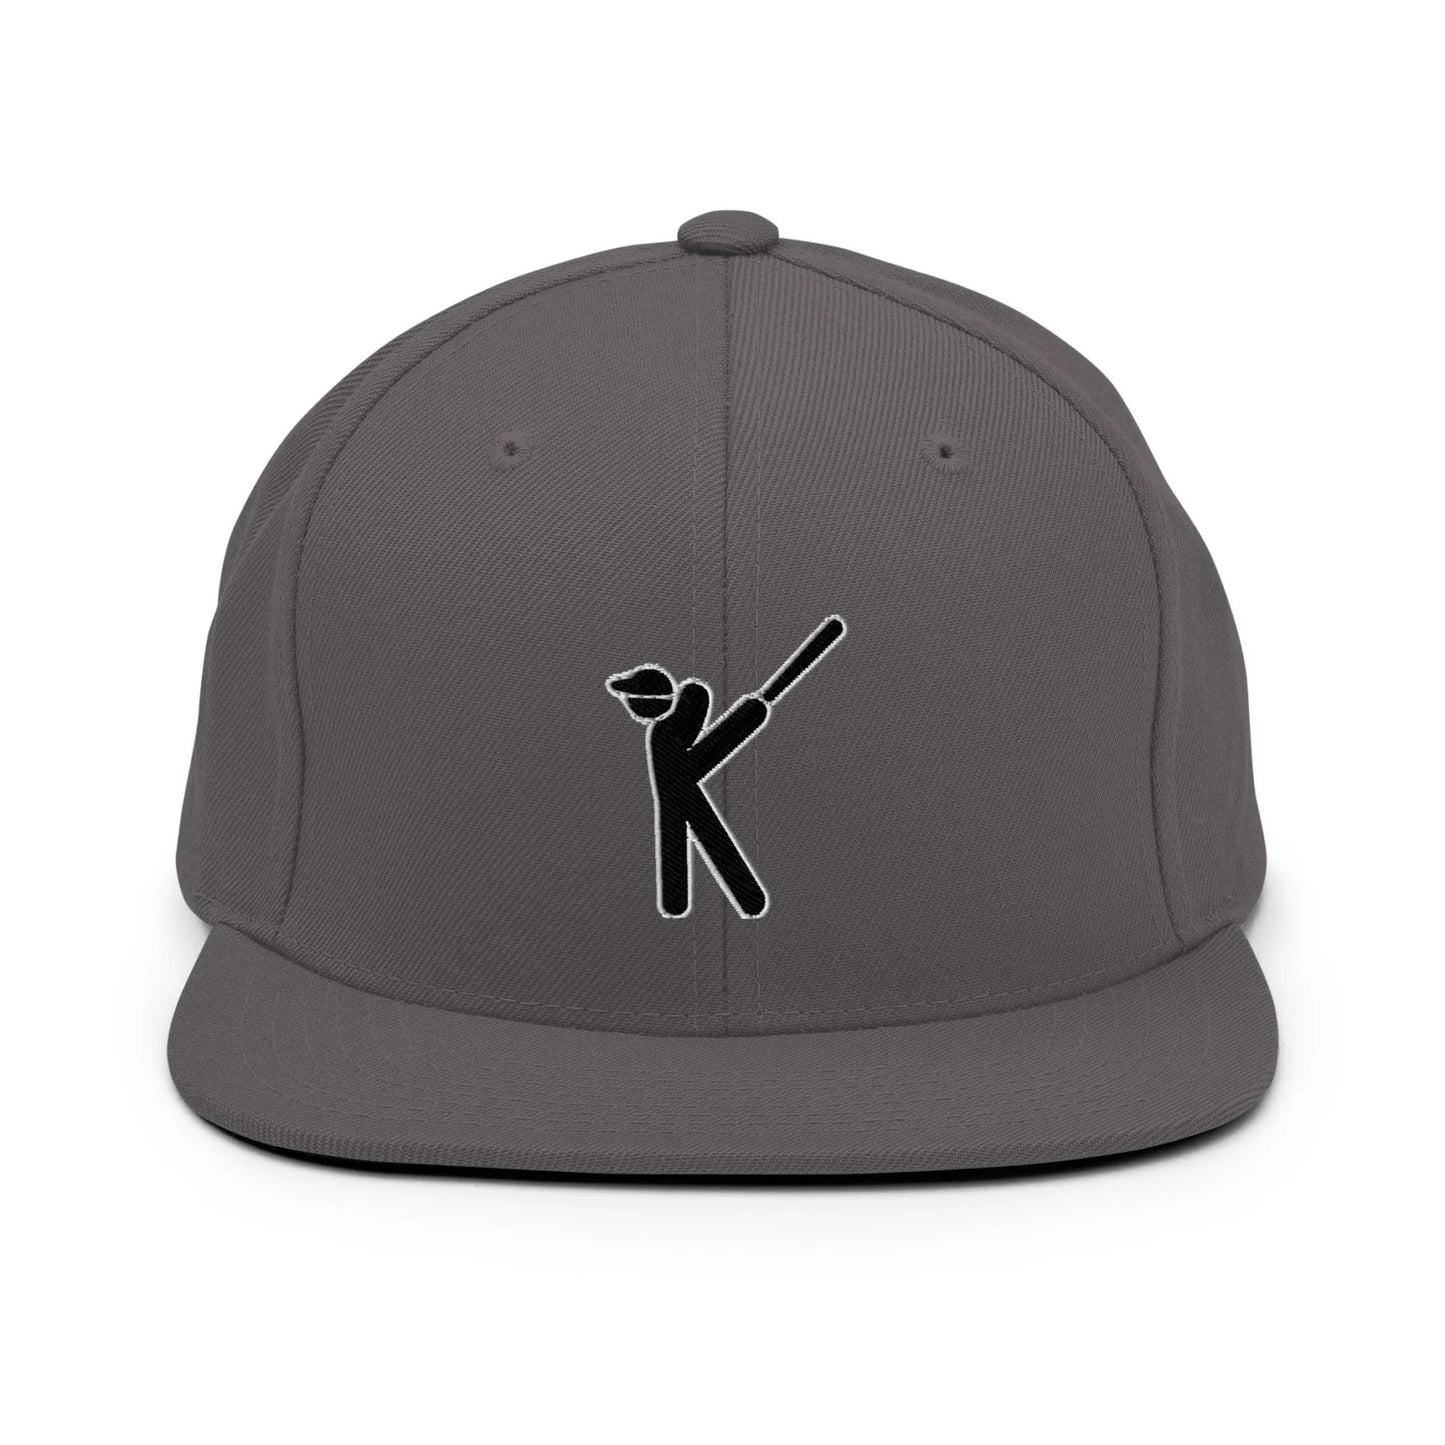 Kasabe ShowZone snapback hat in dark grey